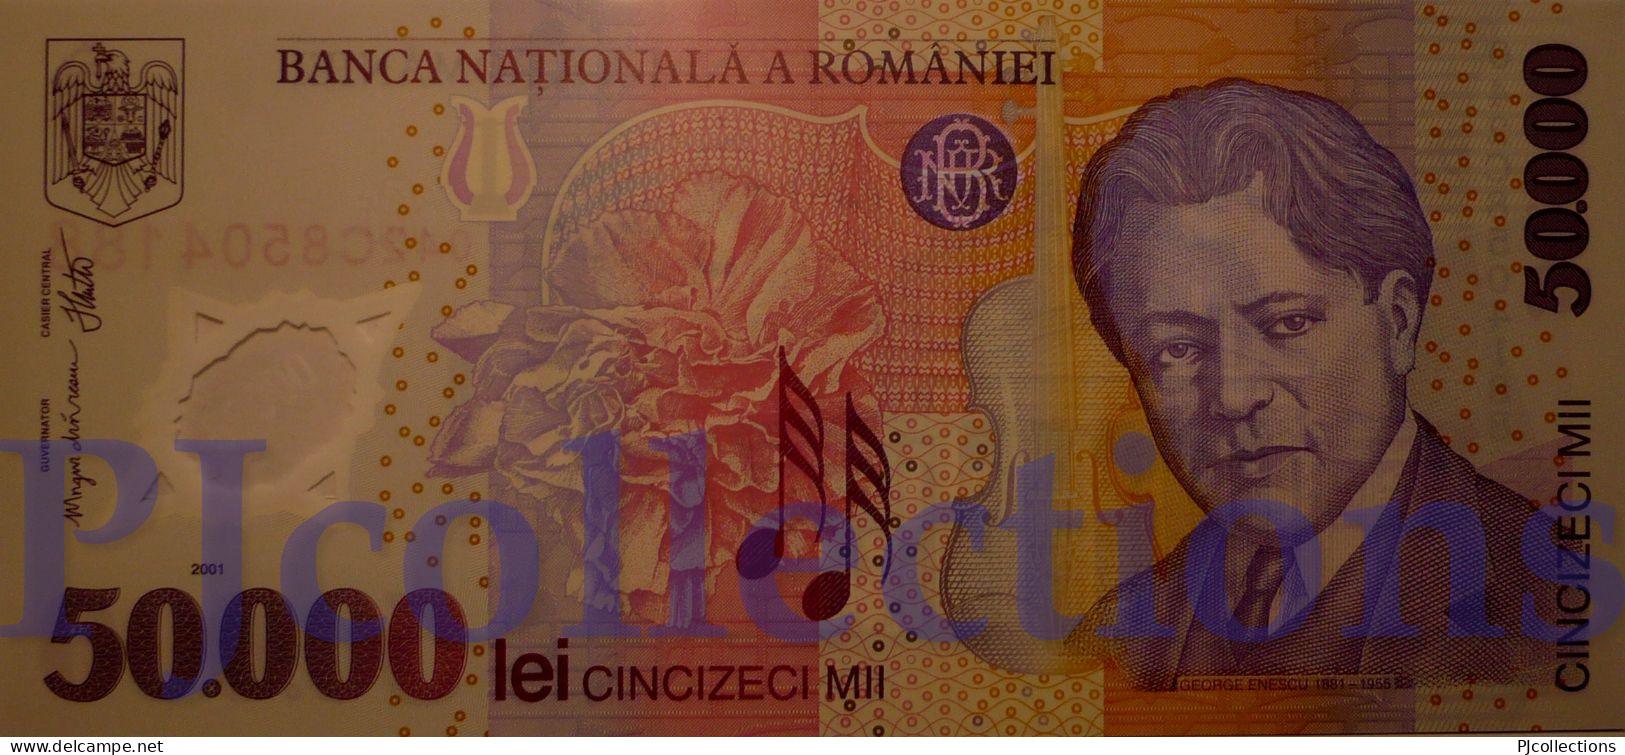 ROMANIA 50000 LEI 2001 PICK 113a POLYMER UNC - Roemenië